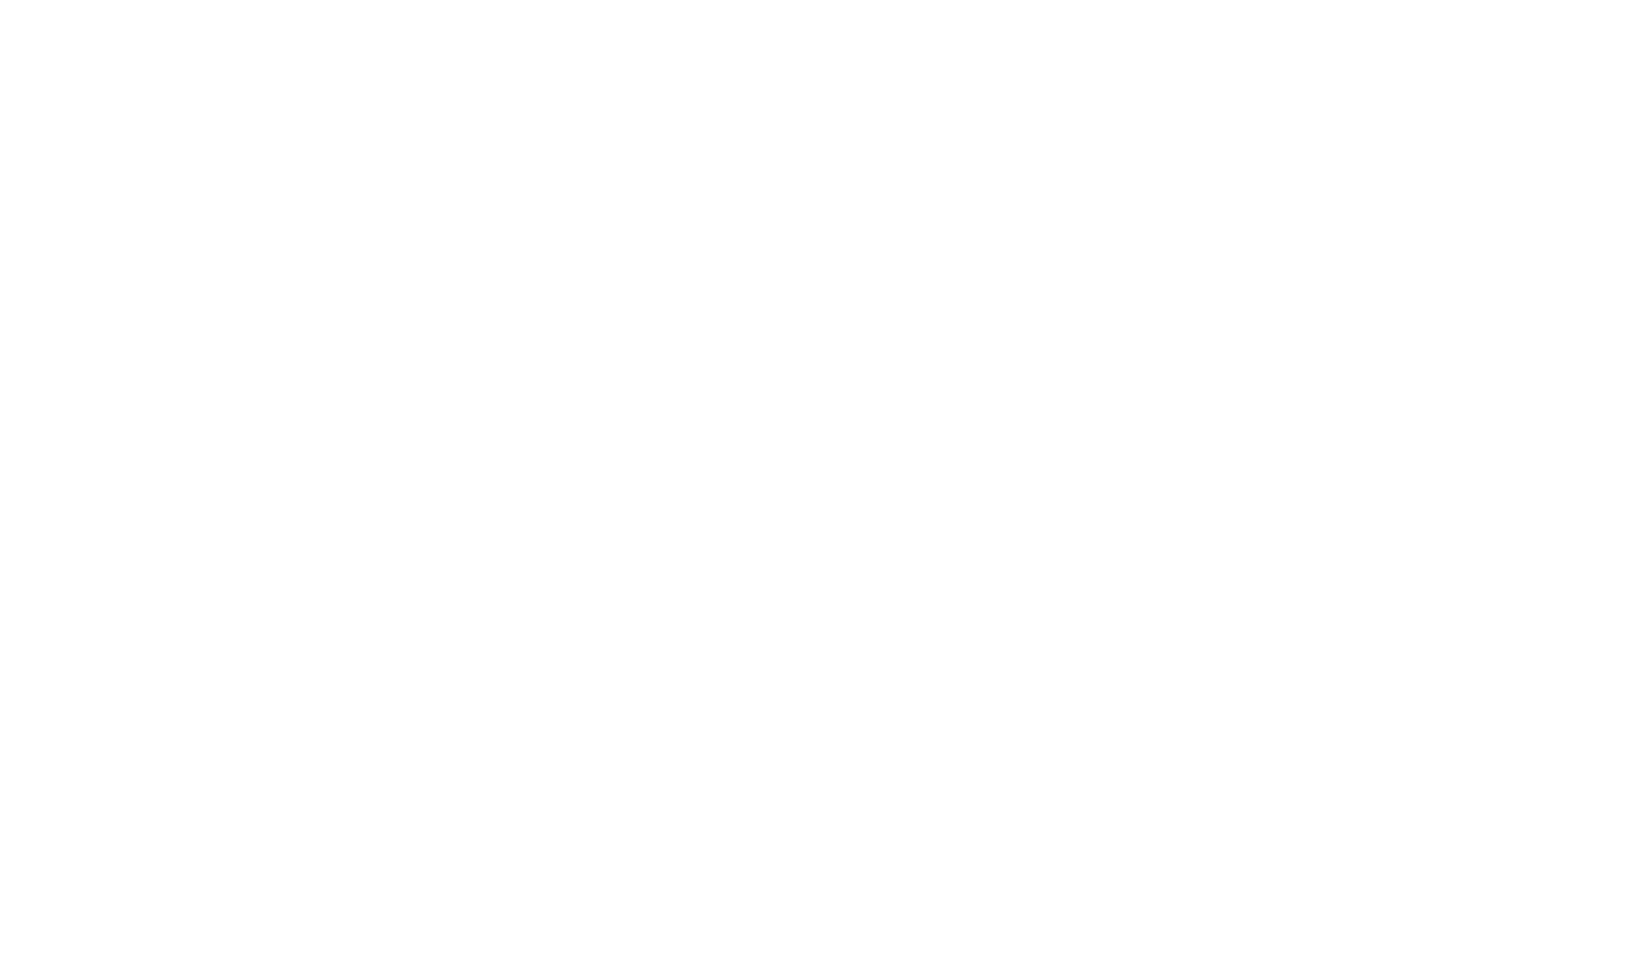 Keyboards & Dreams - Magazine